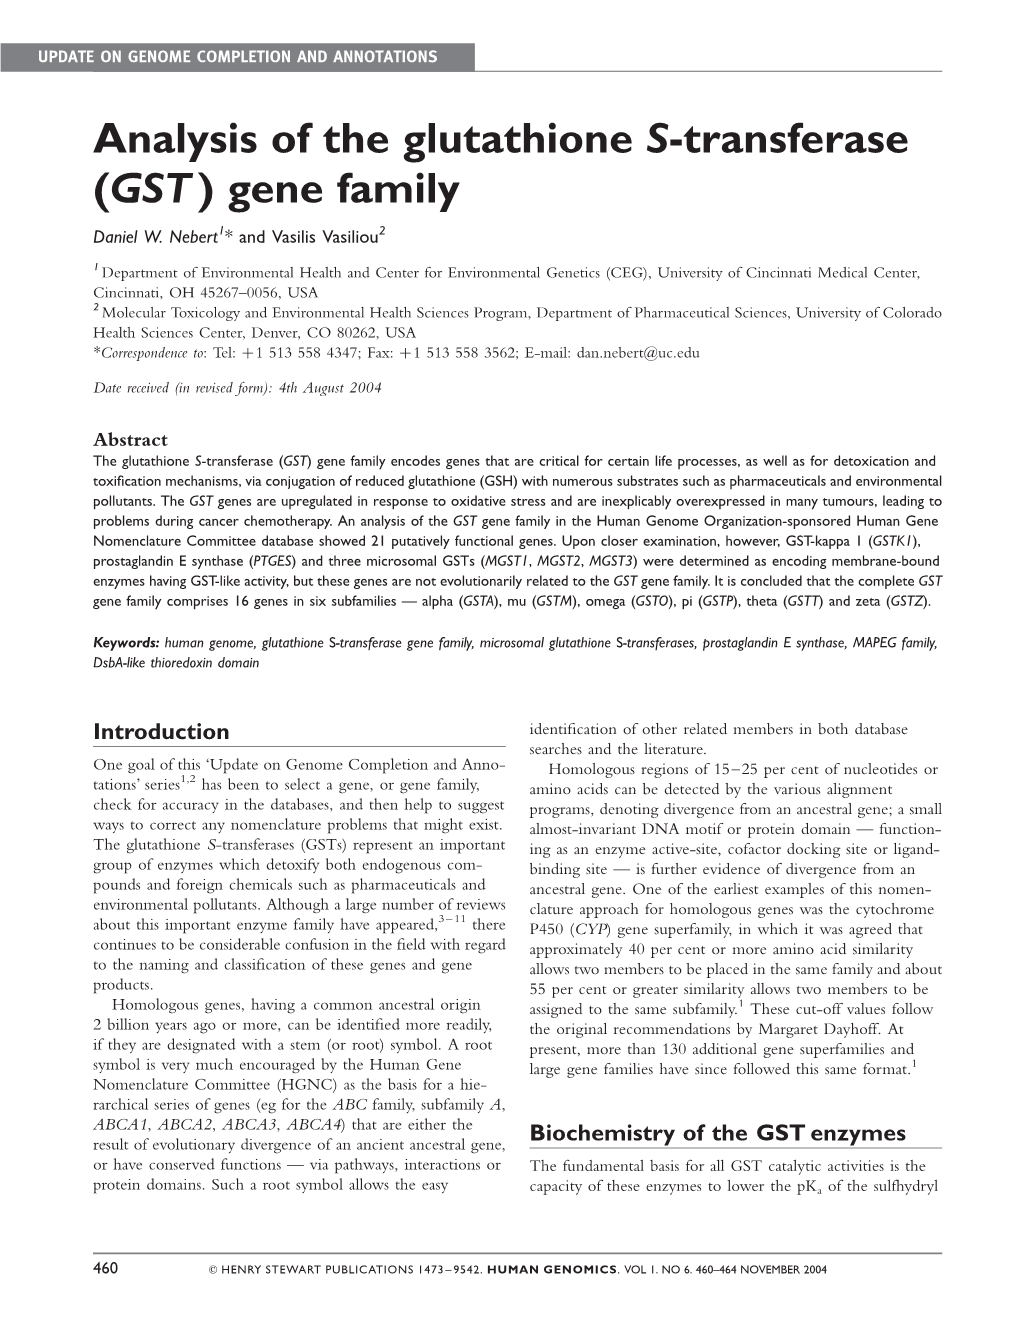 Analysis of the Glutathione S-Transferase (GST) Gene Family